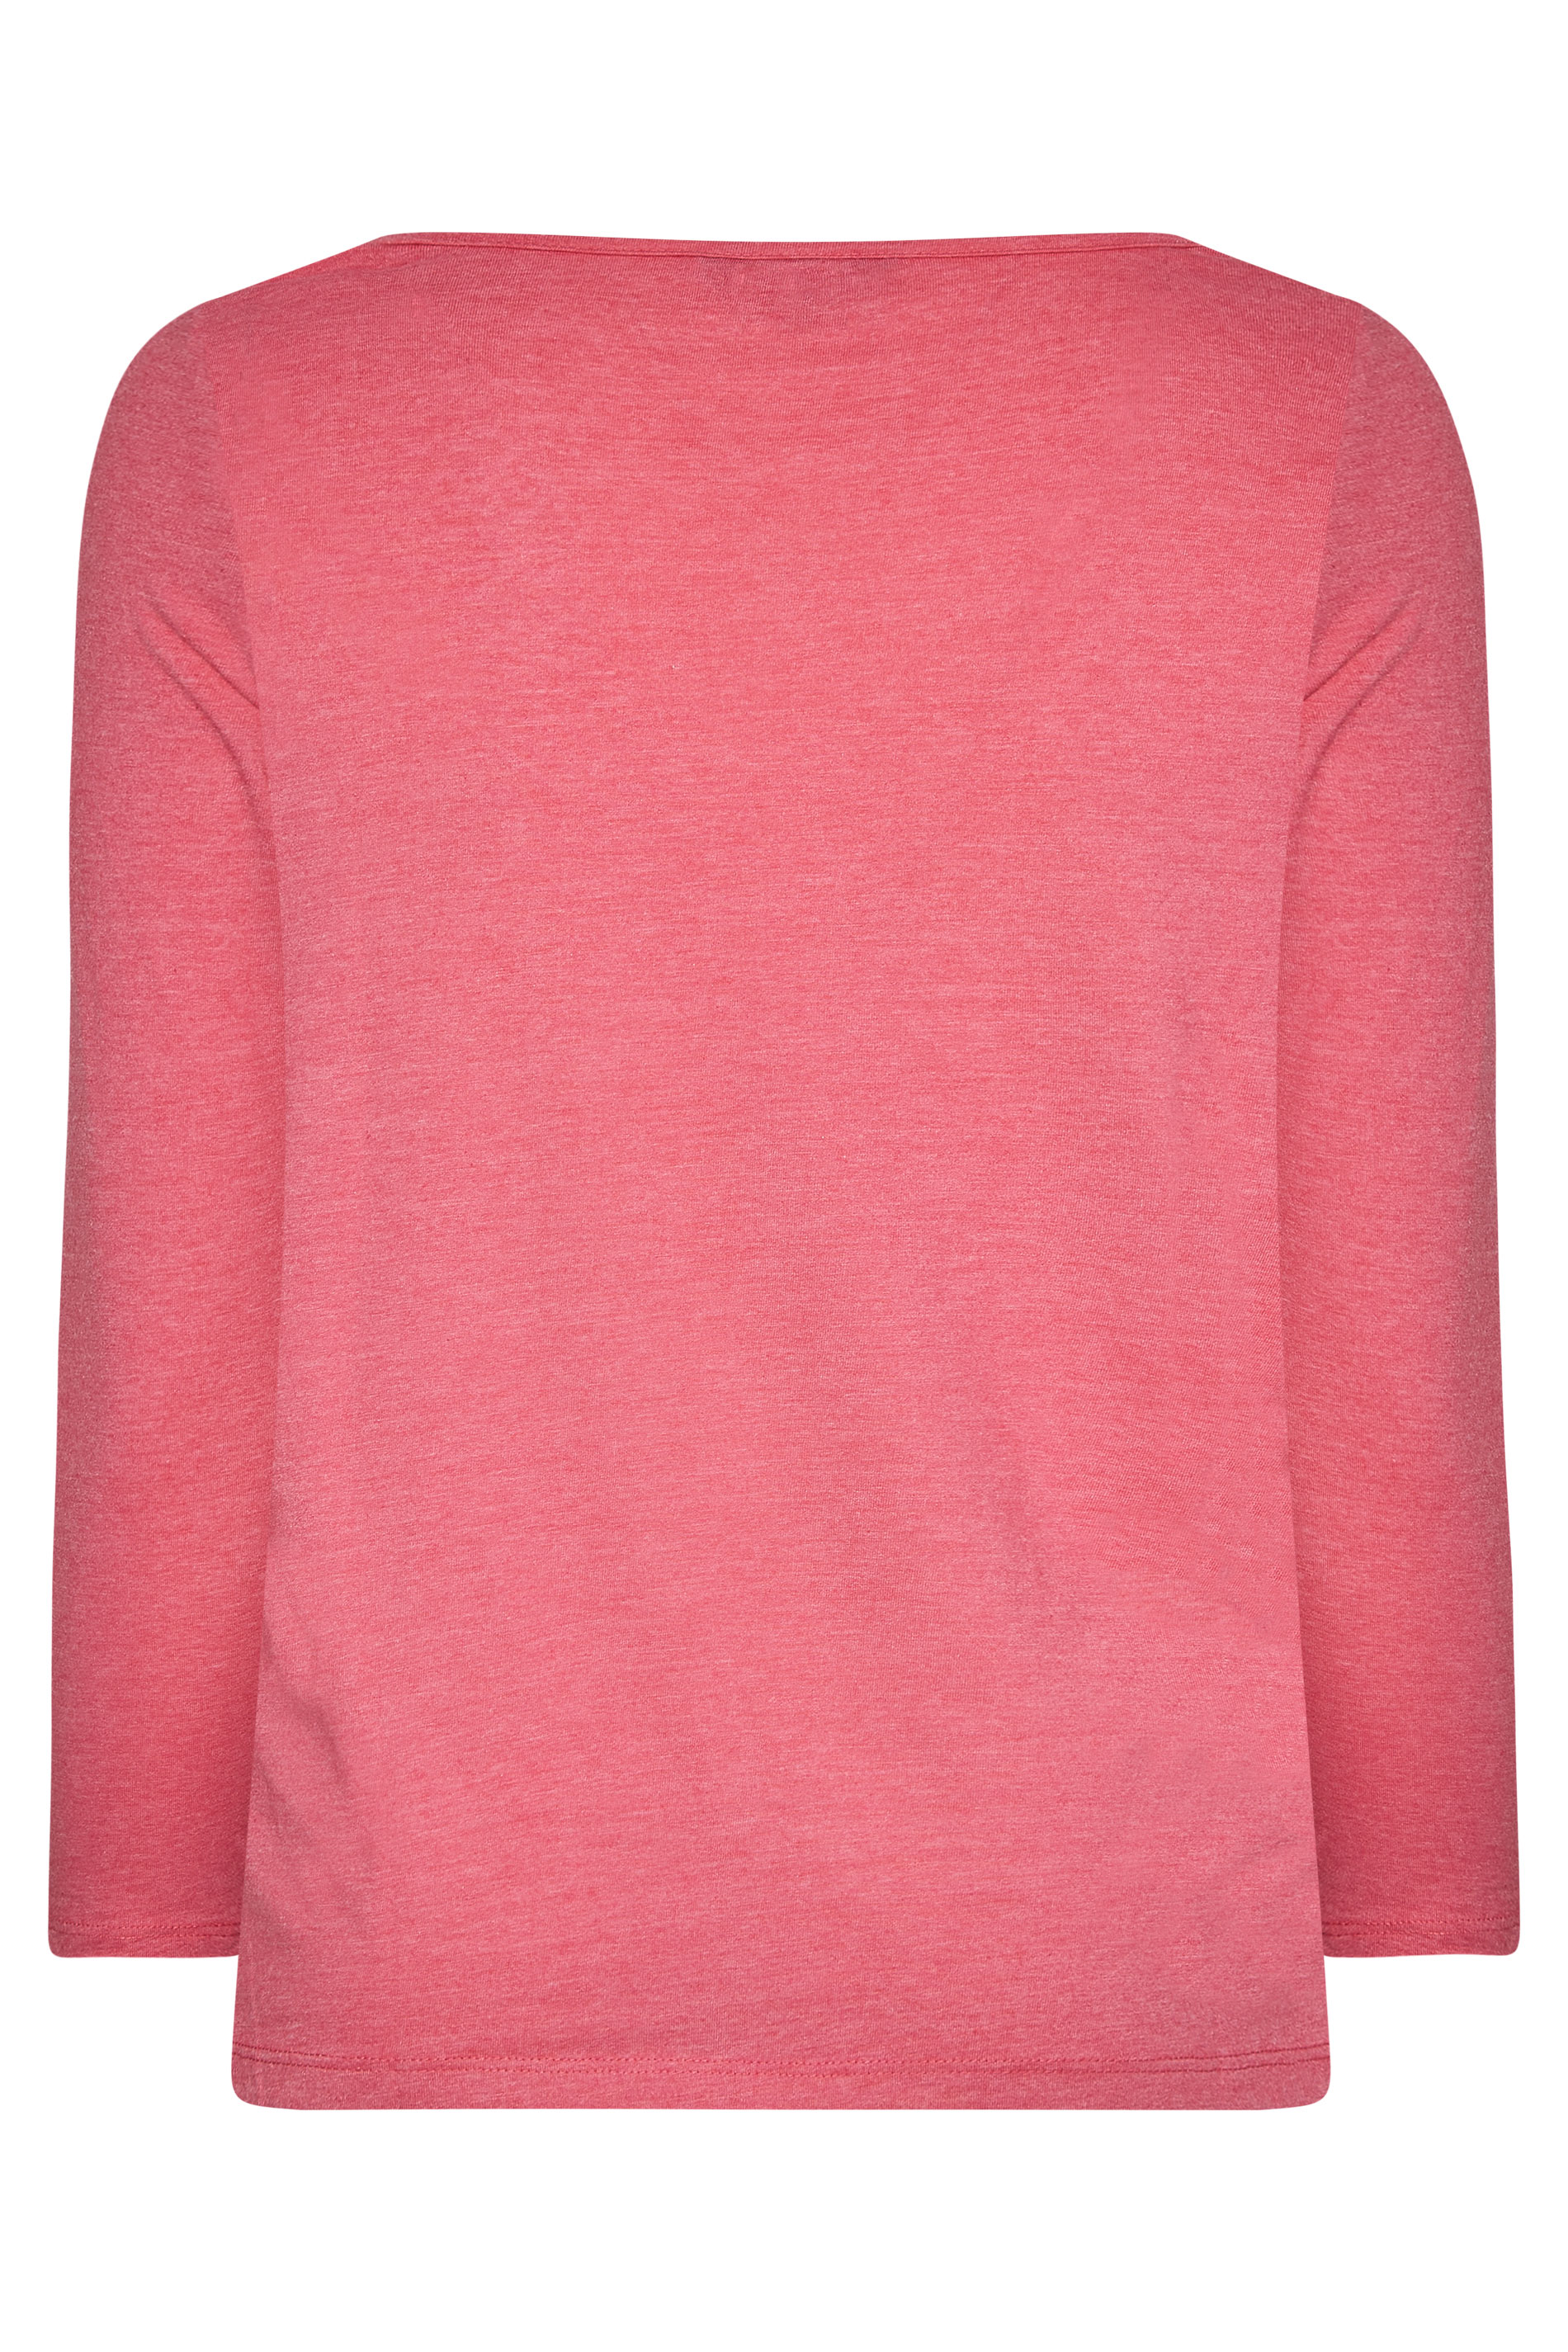 Grande taille  Tops Grande taille  T-Shirts | T-Shirt Rose Manches Longues en Jersey - KE01408